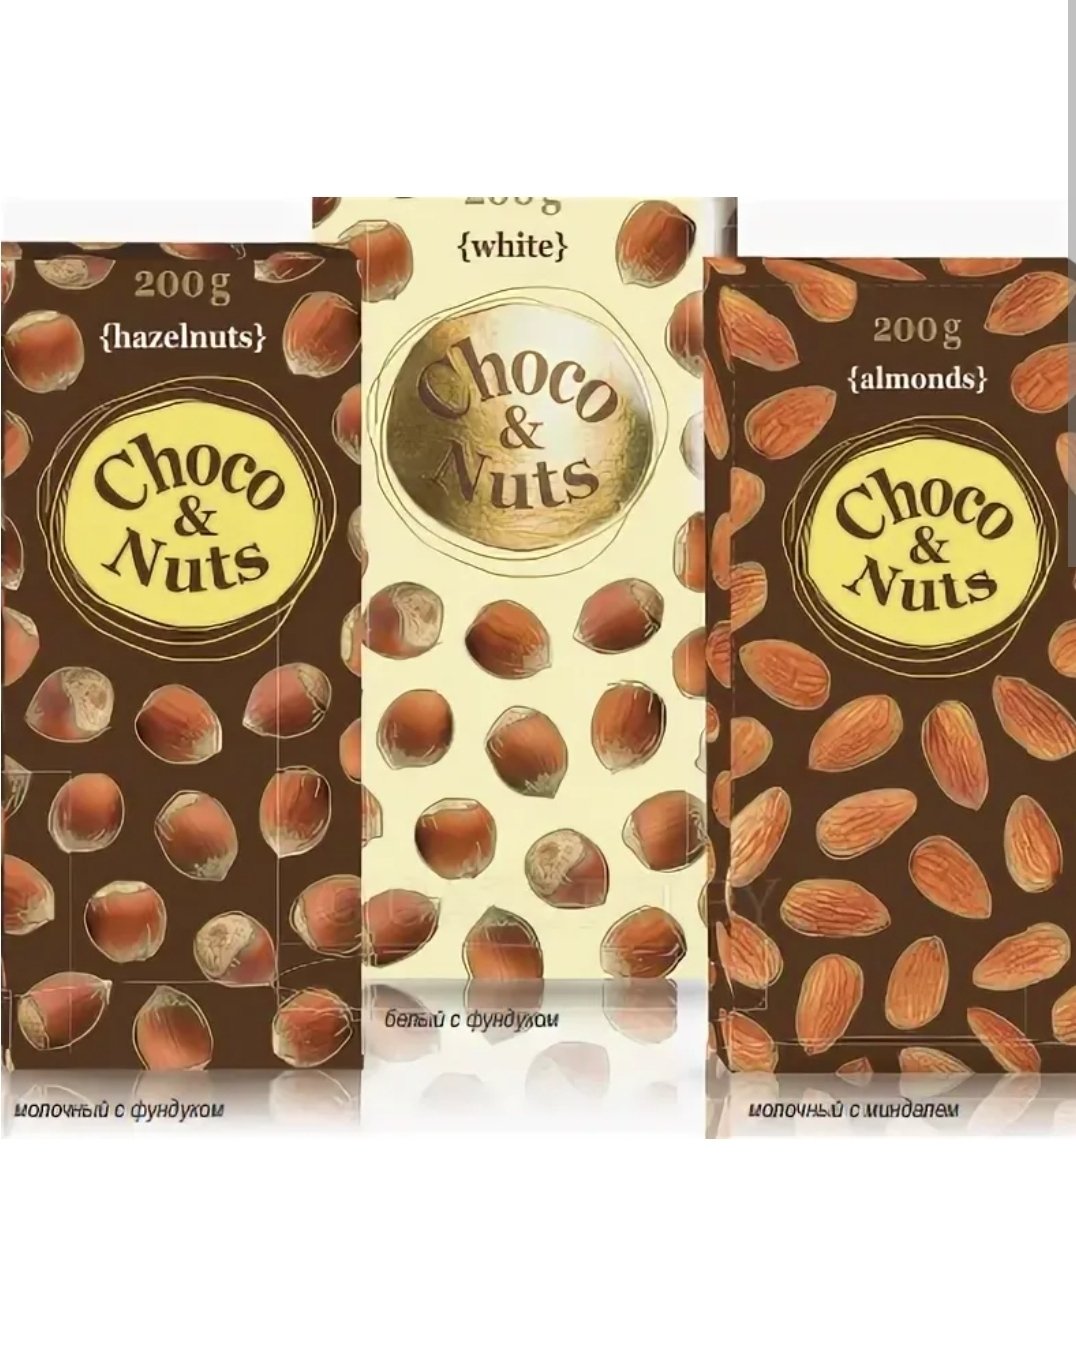 Choco nuts цена. Choco Nuts 200g с фундуком. Шоколад Чоко энд натс молочный с цельным миндалем 200 г. Шоколад французский Choco Nuts. Choco Nuts 200g белый с фундуком.